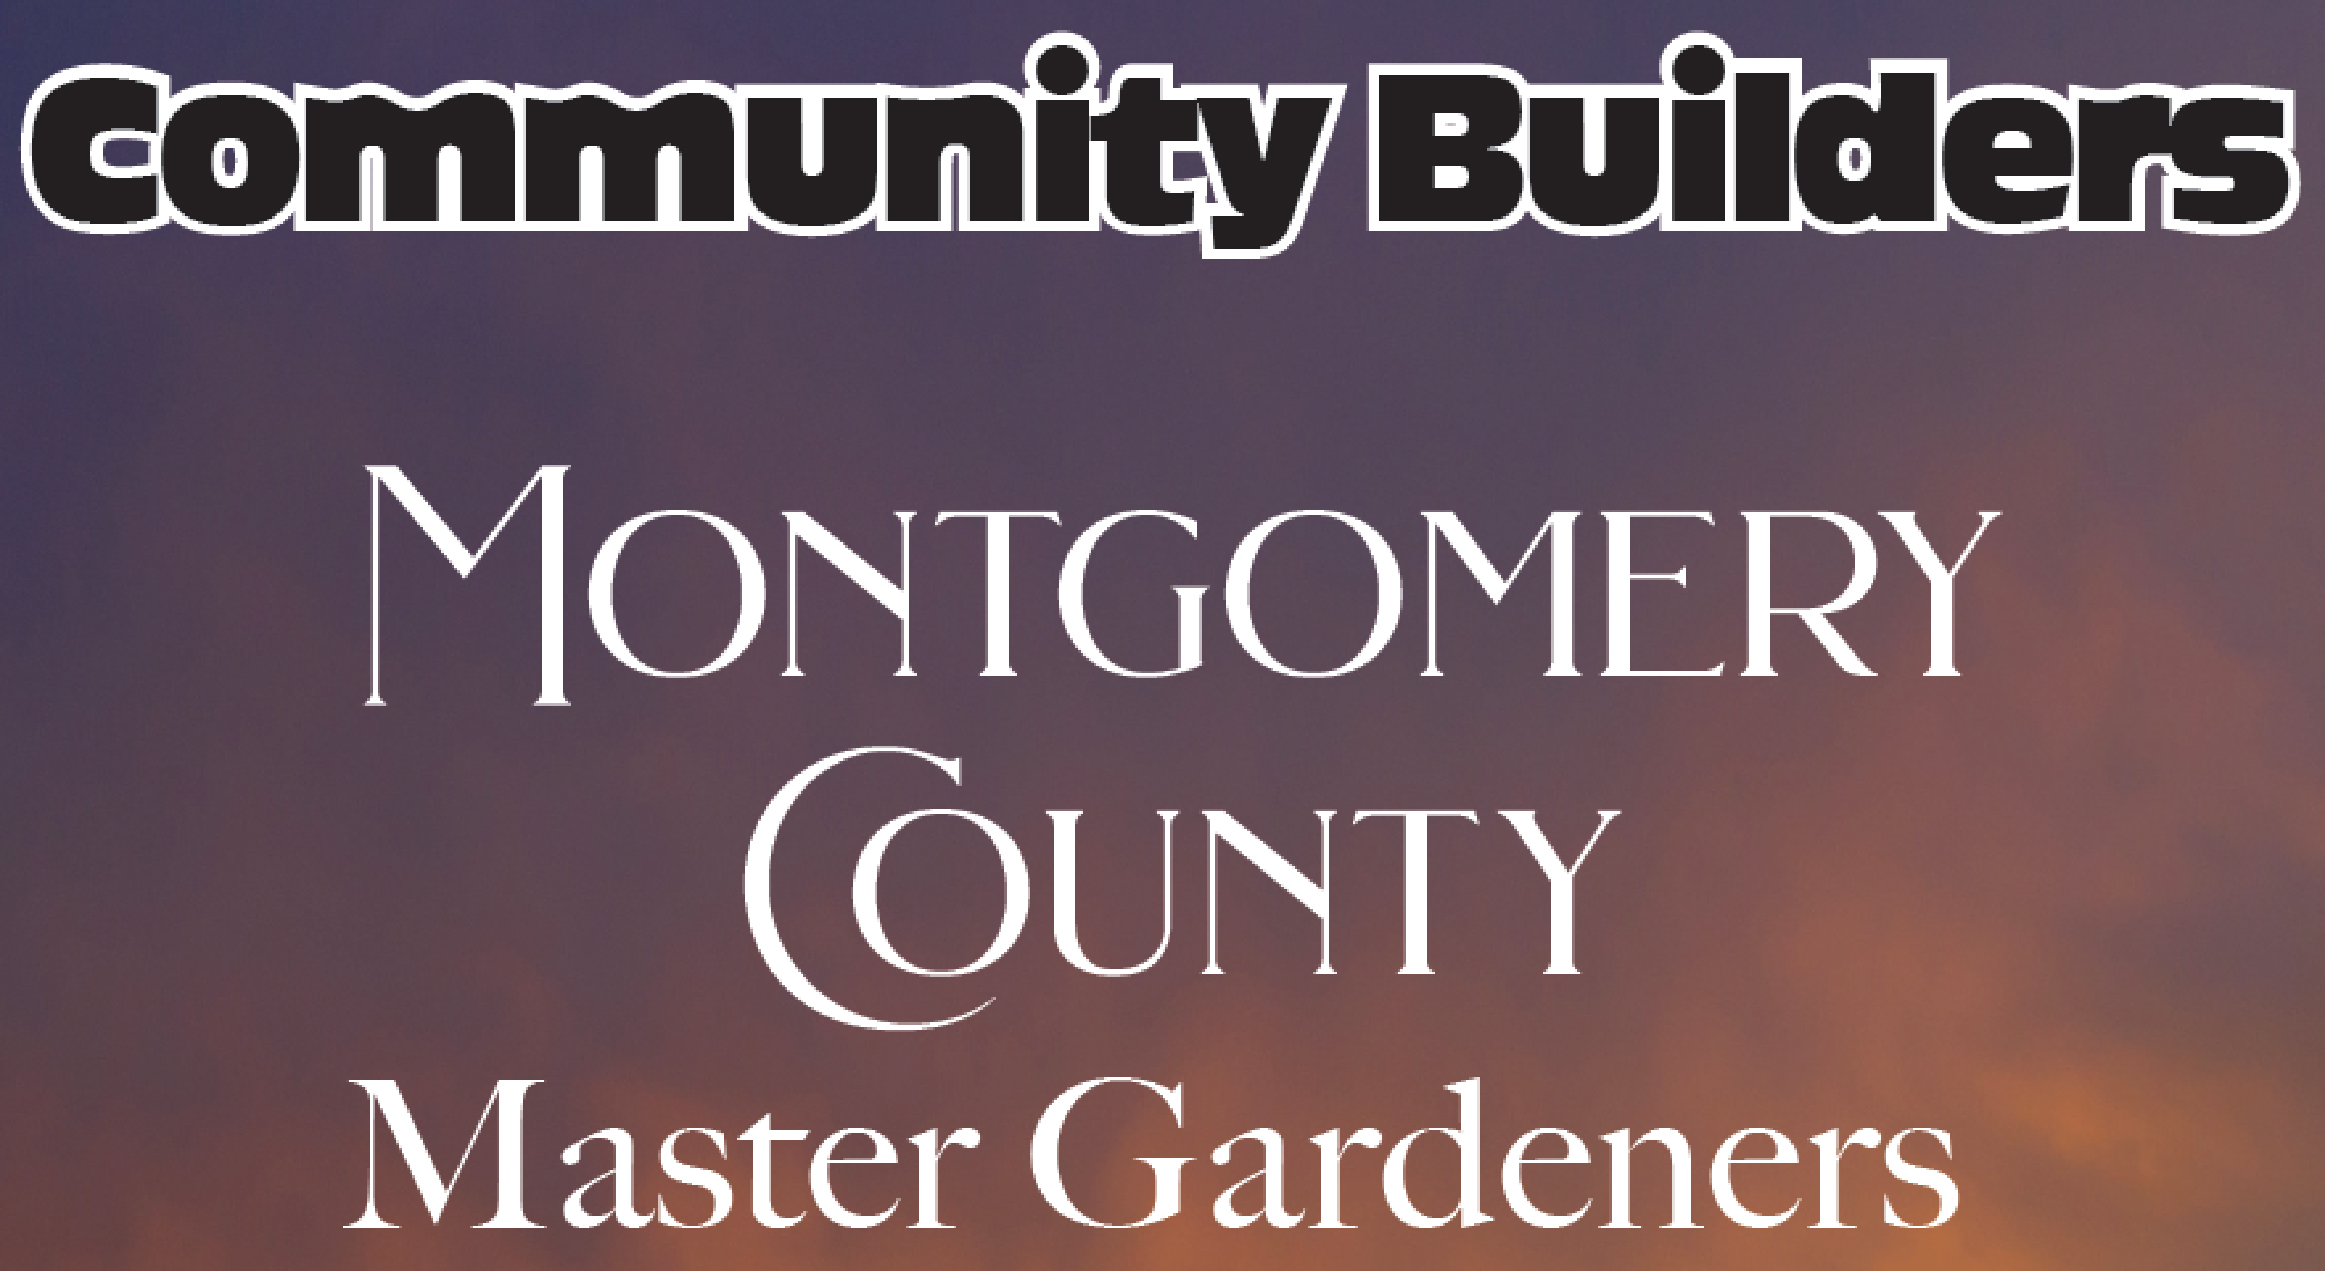 Community Builders Montgomery County Master Gardeners Postcards